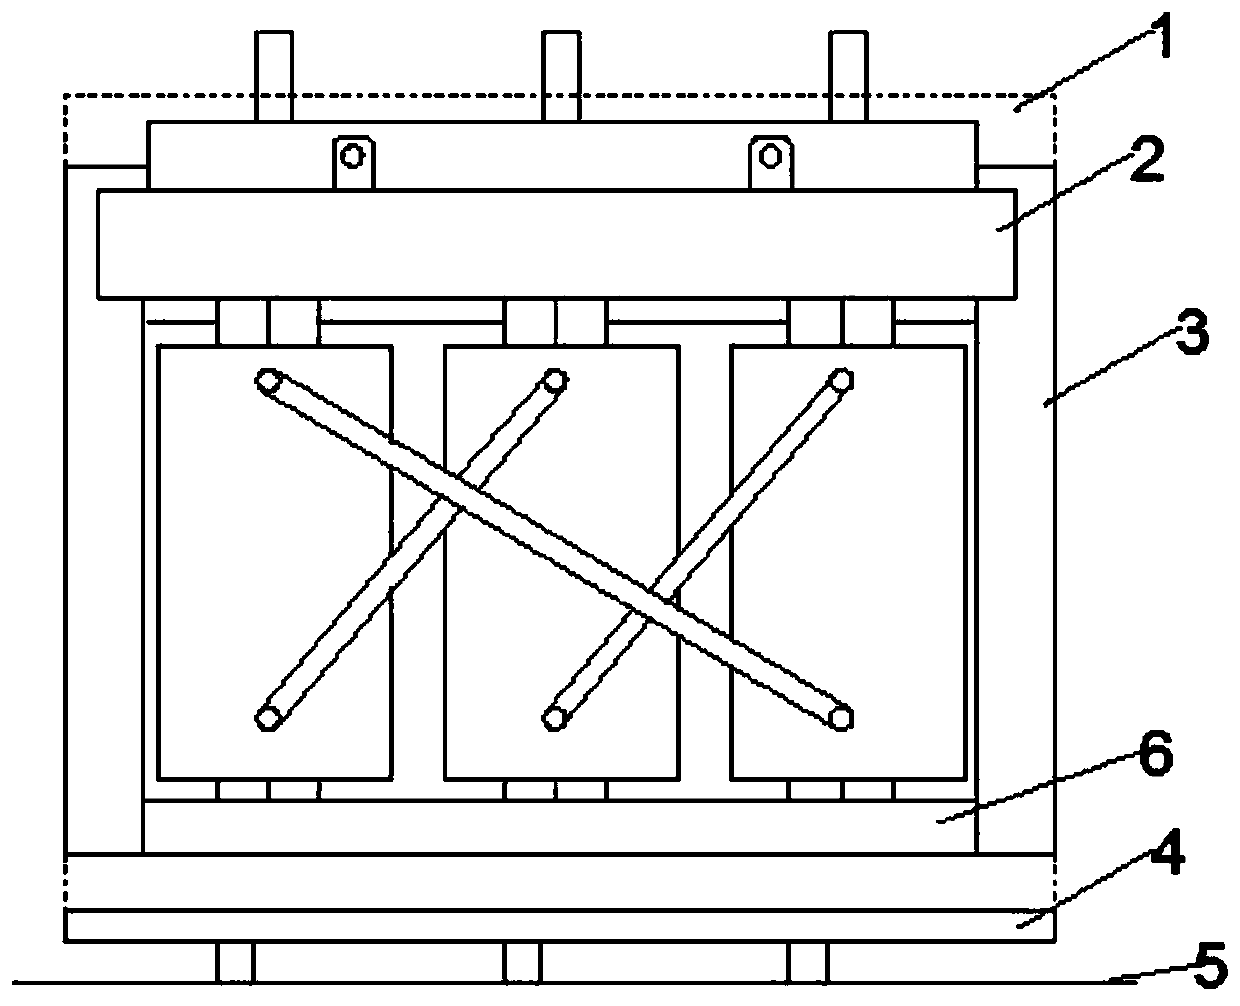 A three-phase five-column amorphous alloy transformer